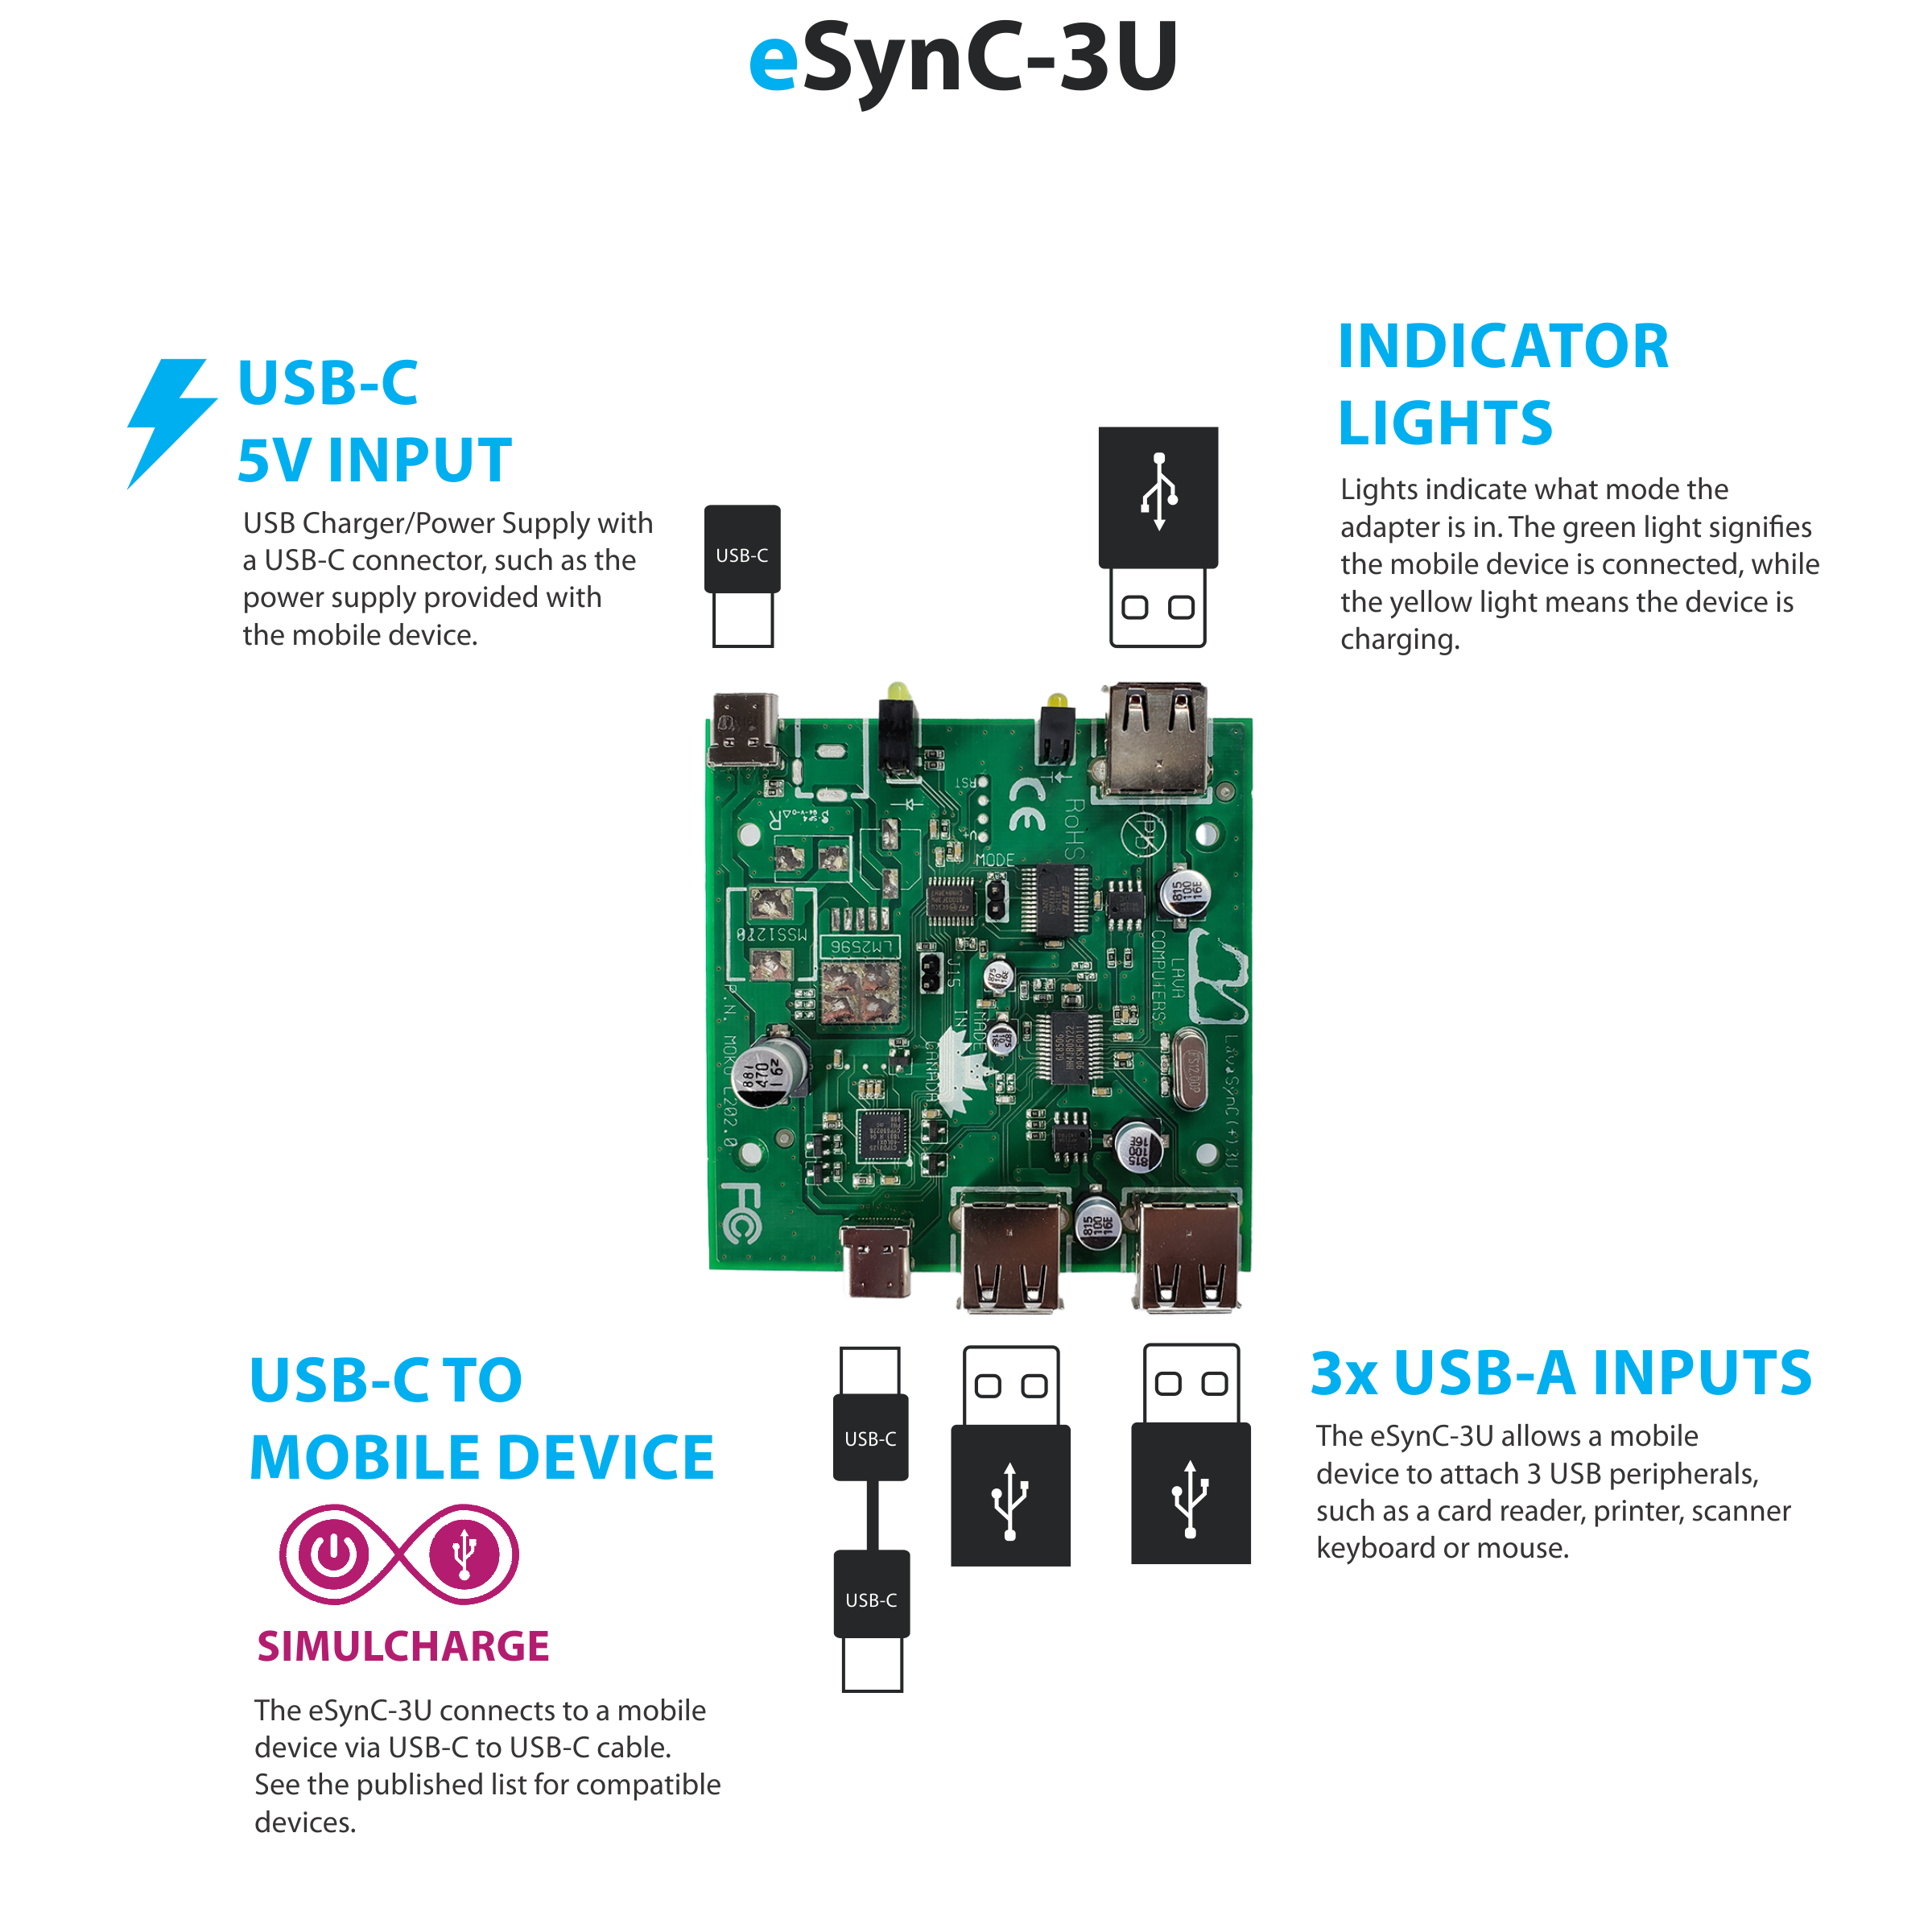 eSynC-3U